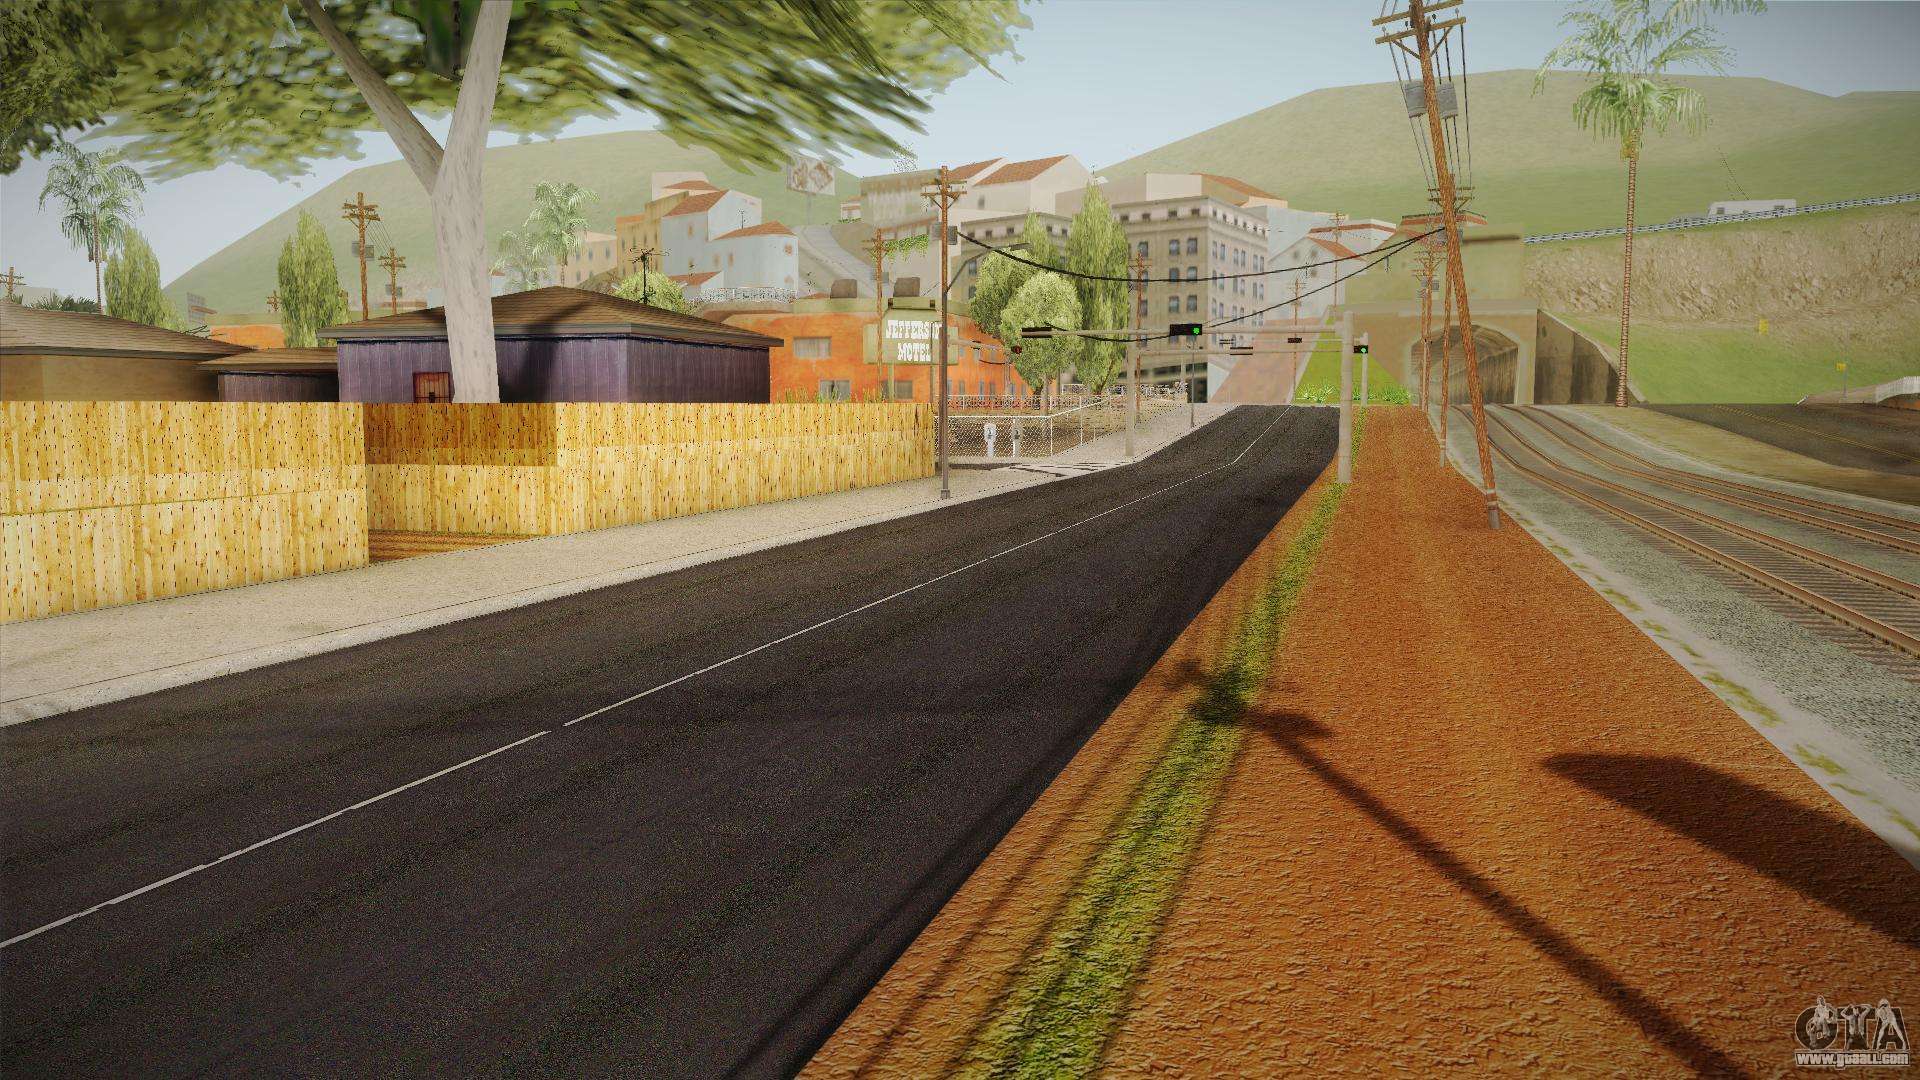 Grand Theft Auto: 'San Andreas' 8K Resolution Remaster Looks Stunning